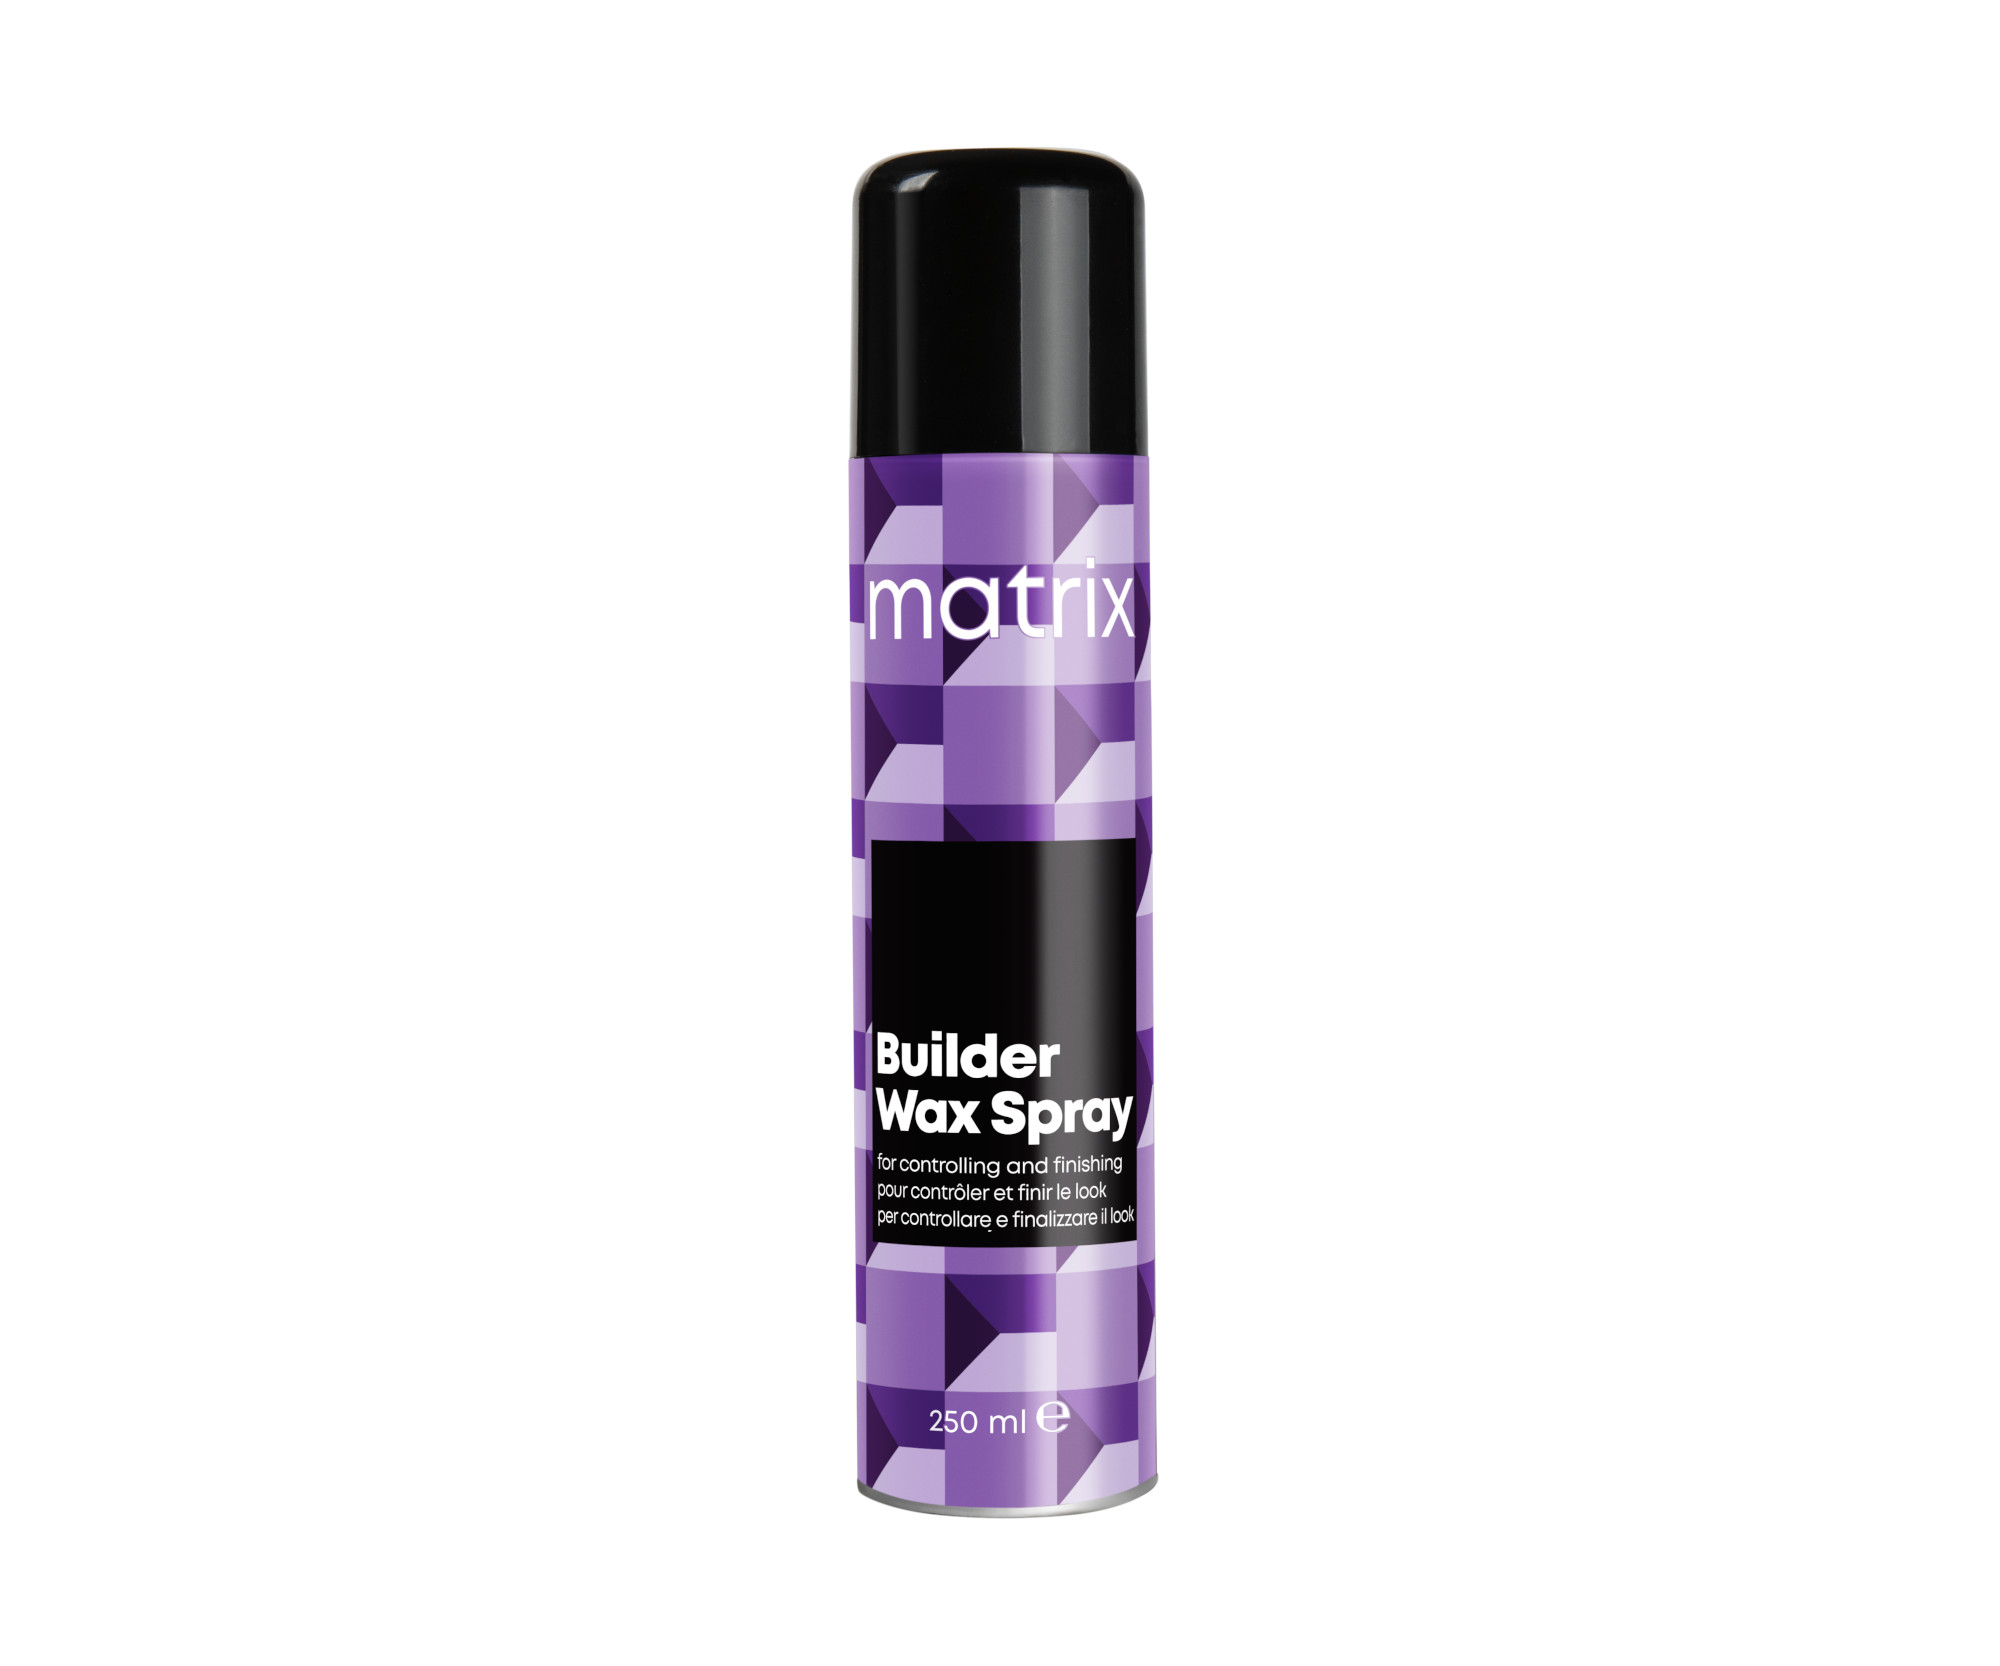 Vosk ve spreji pro matný vzhled vlasů Matrix Builder Wax Spray - 250 ml + dárek zdarma